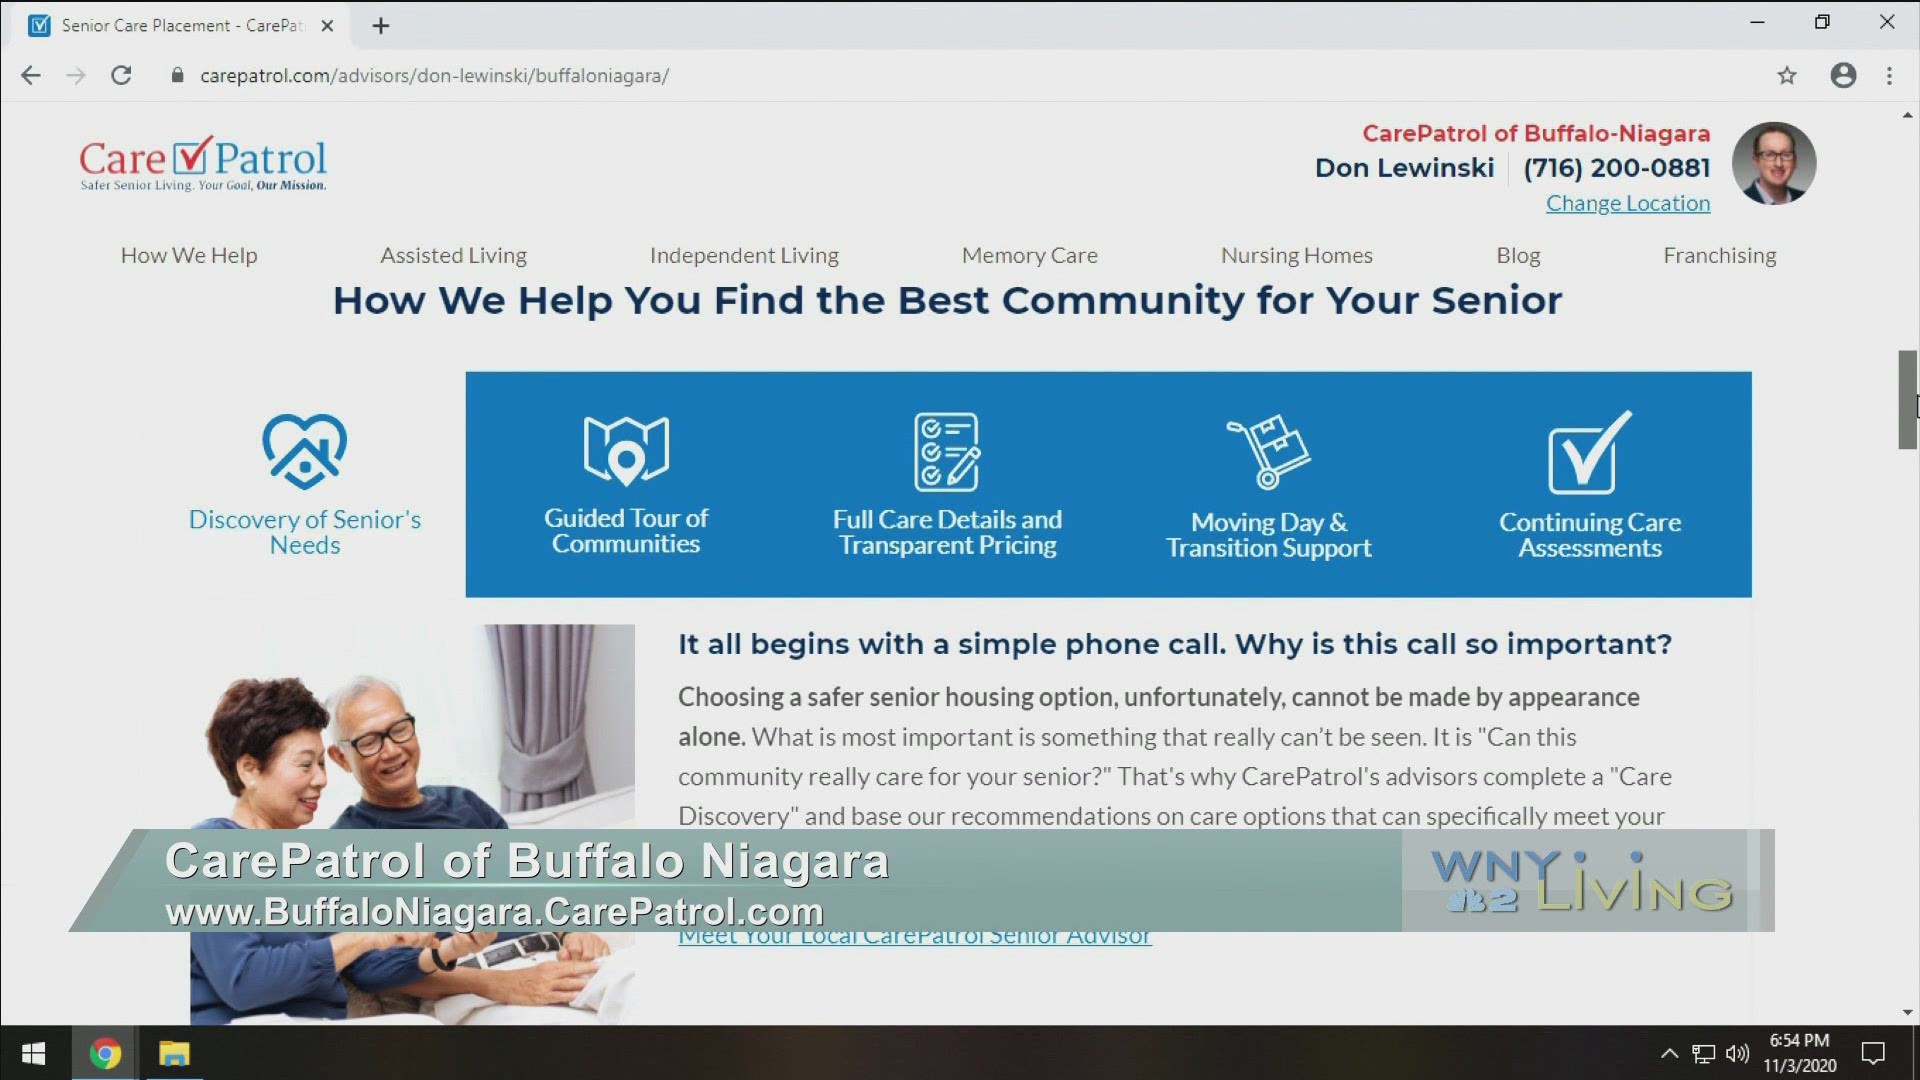 WNY Living - November 7 - CarePatrol of Buffalo Niagara (THIS VIDEO IS SPONSORED BY CAREPATROL OF BUFFALO NIAGARA)